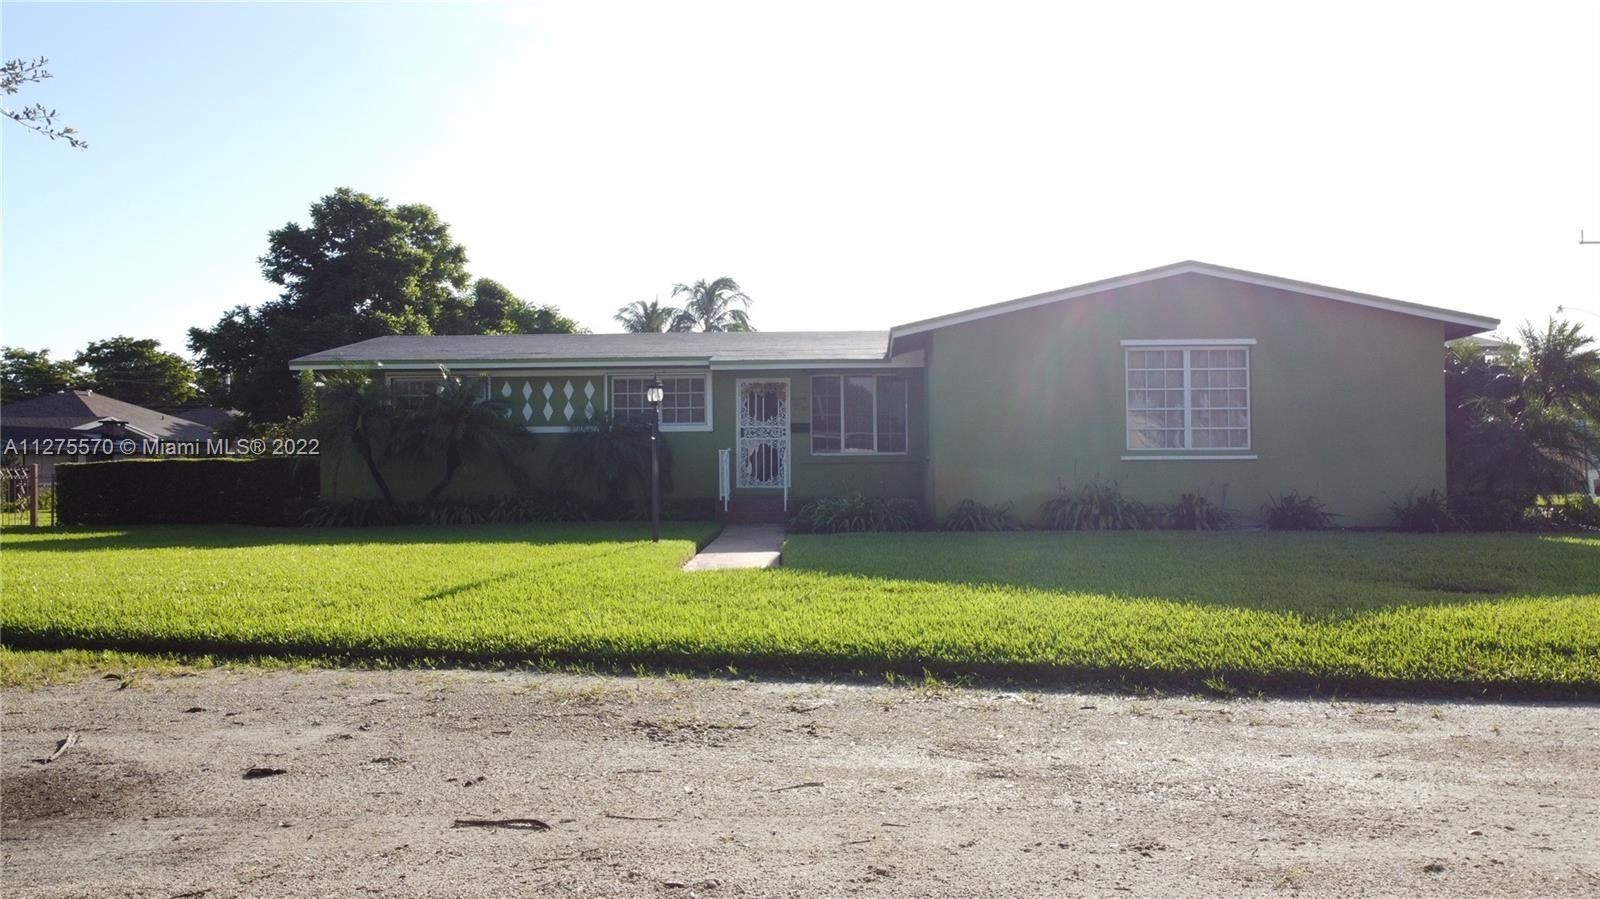 Real estate property located at 7601 20th Ave, Miami-Dade County, Miami, FL